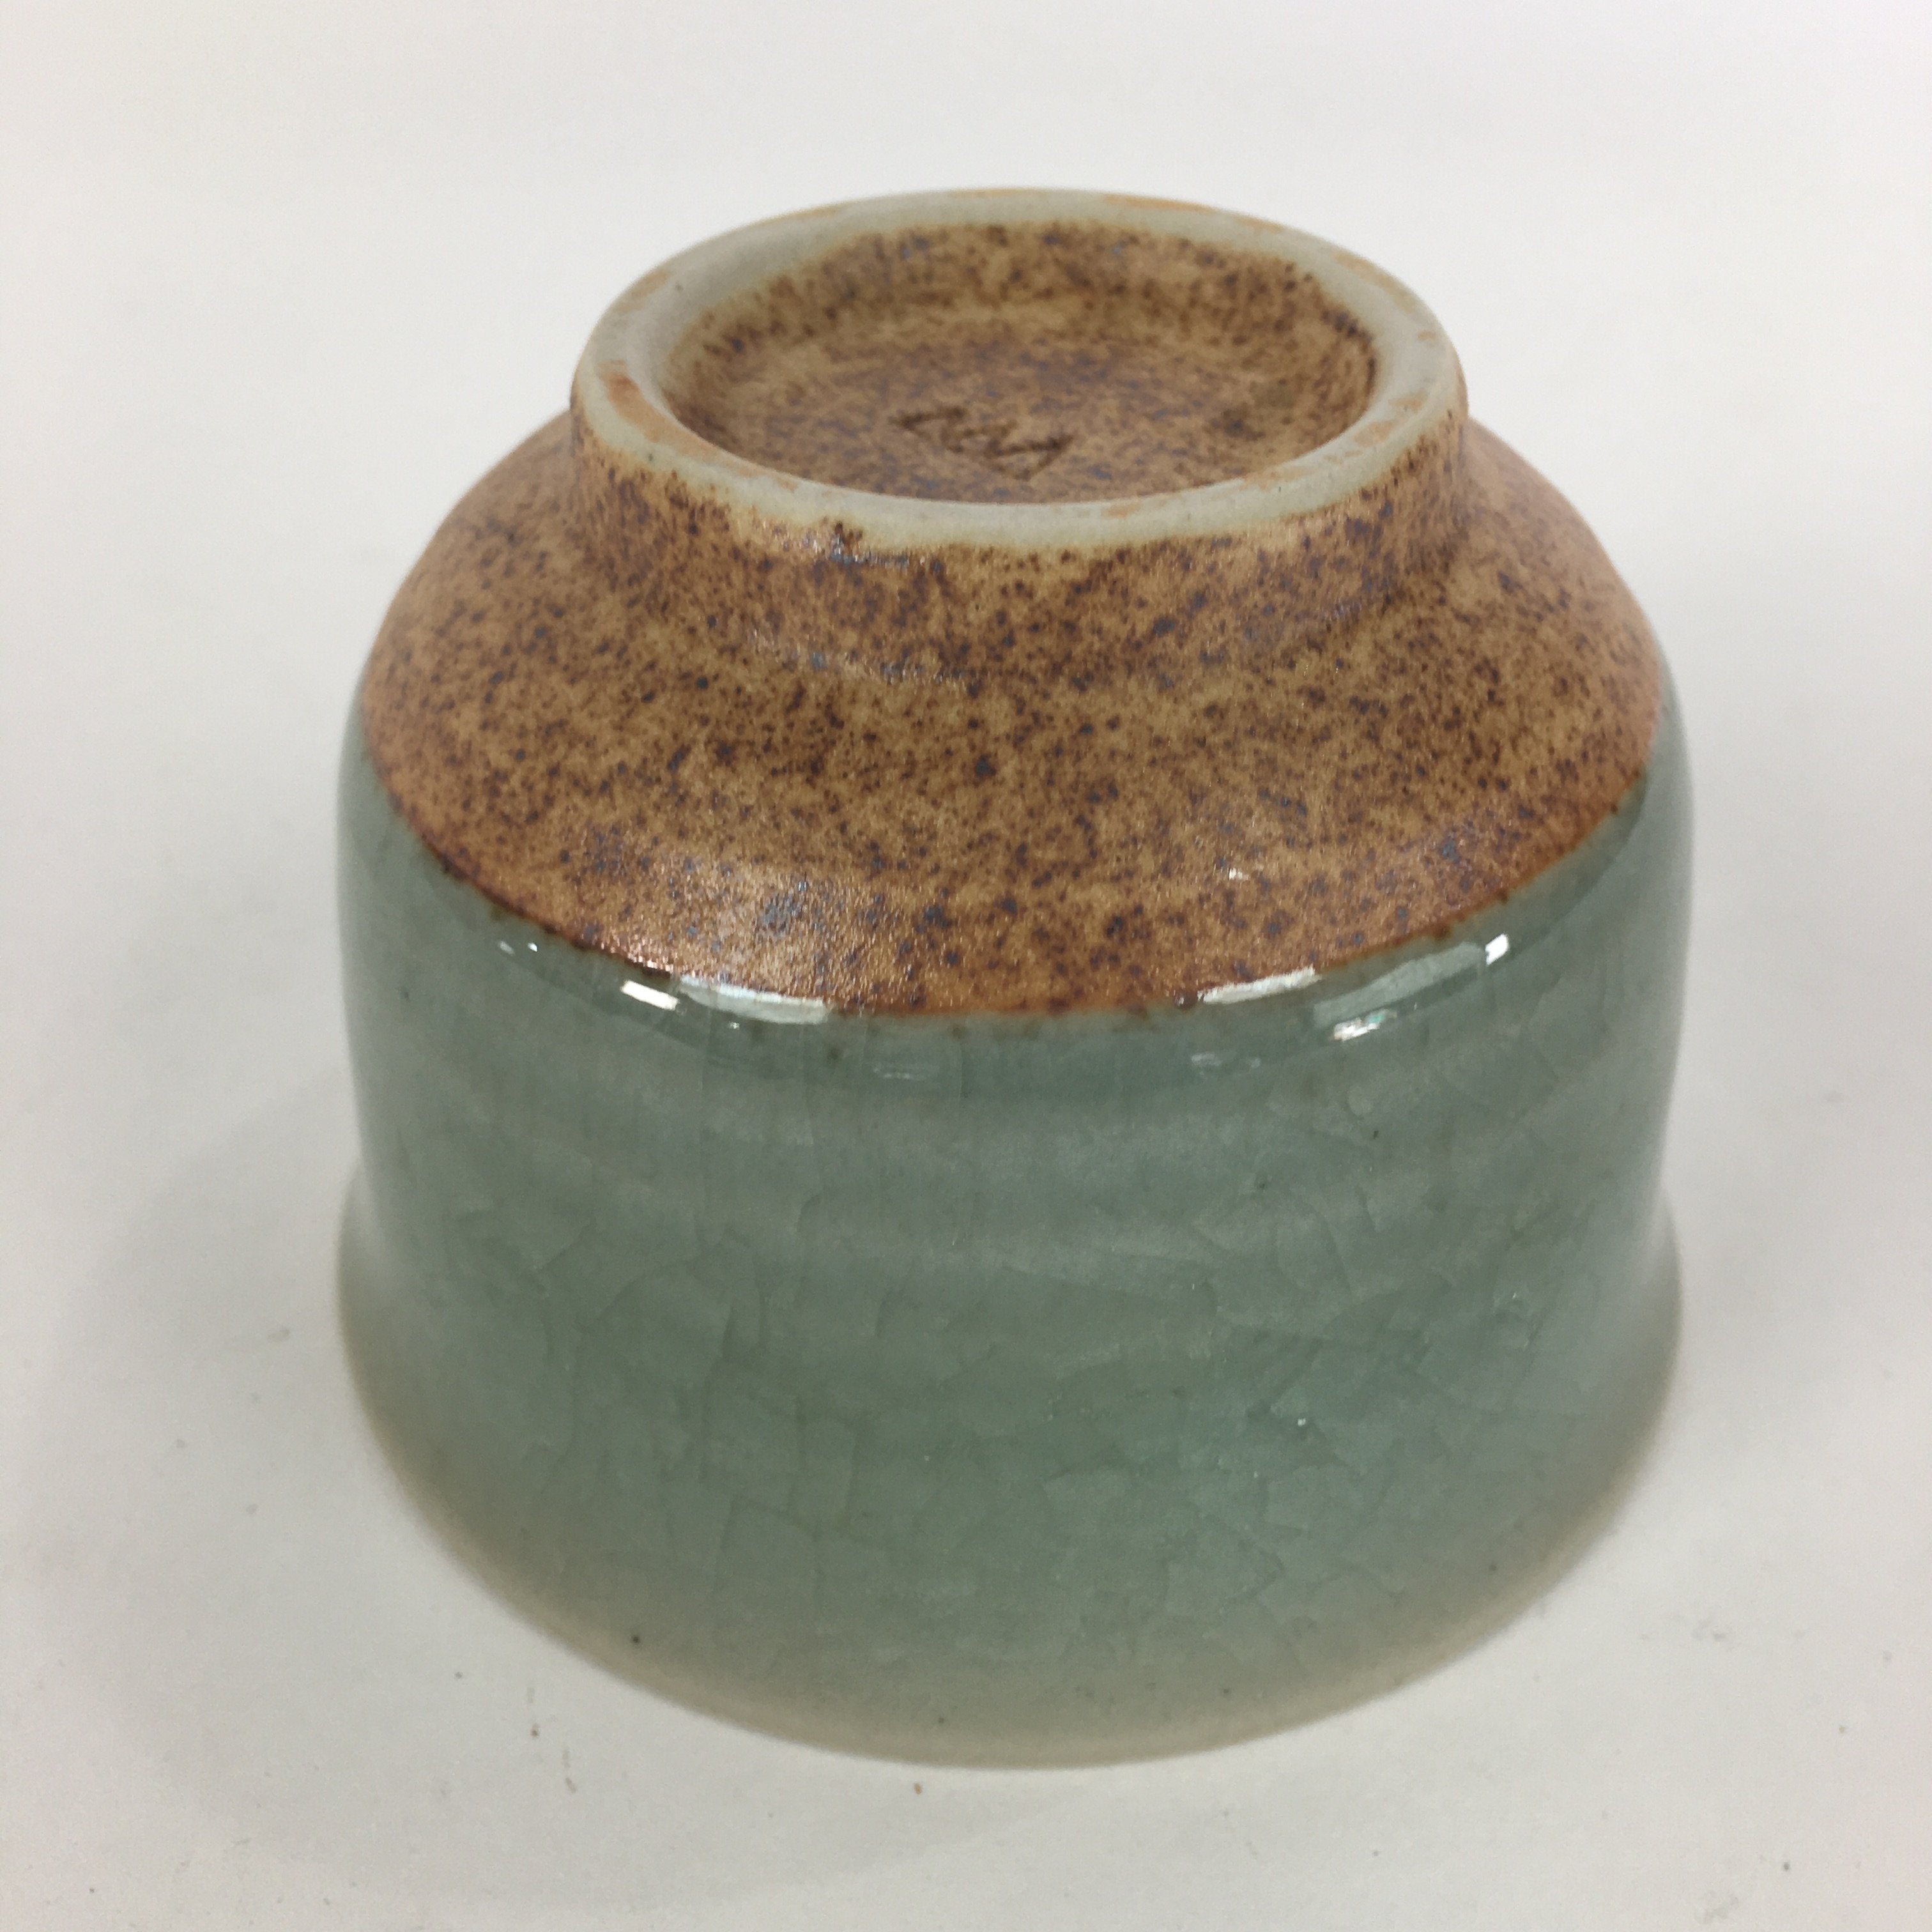 Japanese Porcelain Teacup Yunomi Vtg Green Cracked Glaze Pottery Sencha TC238